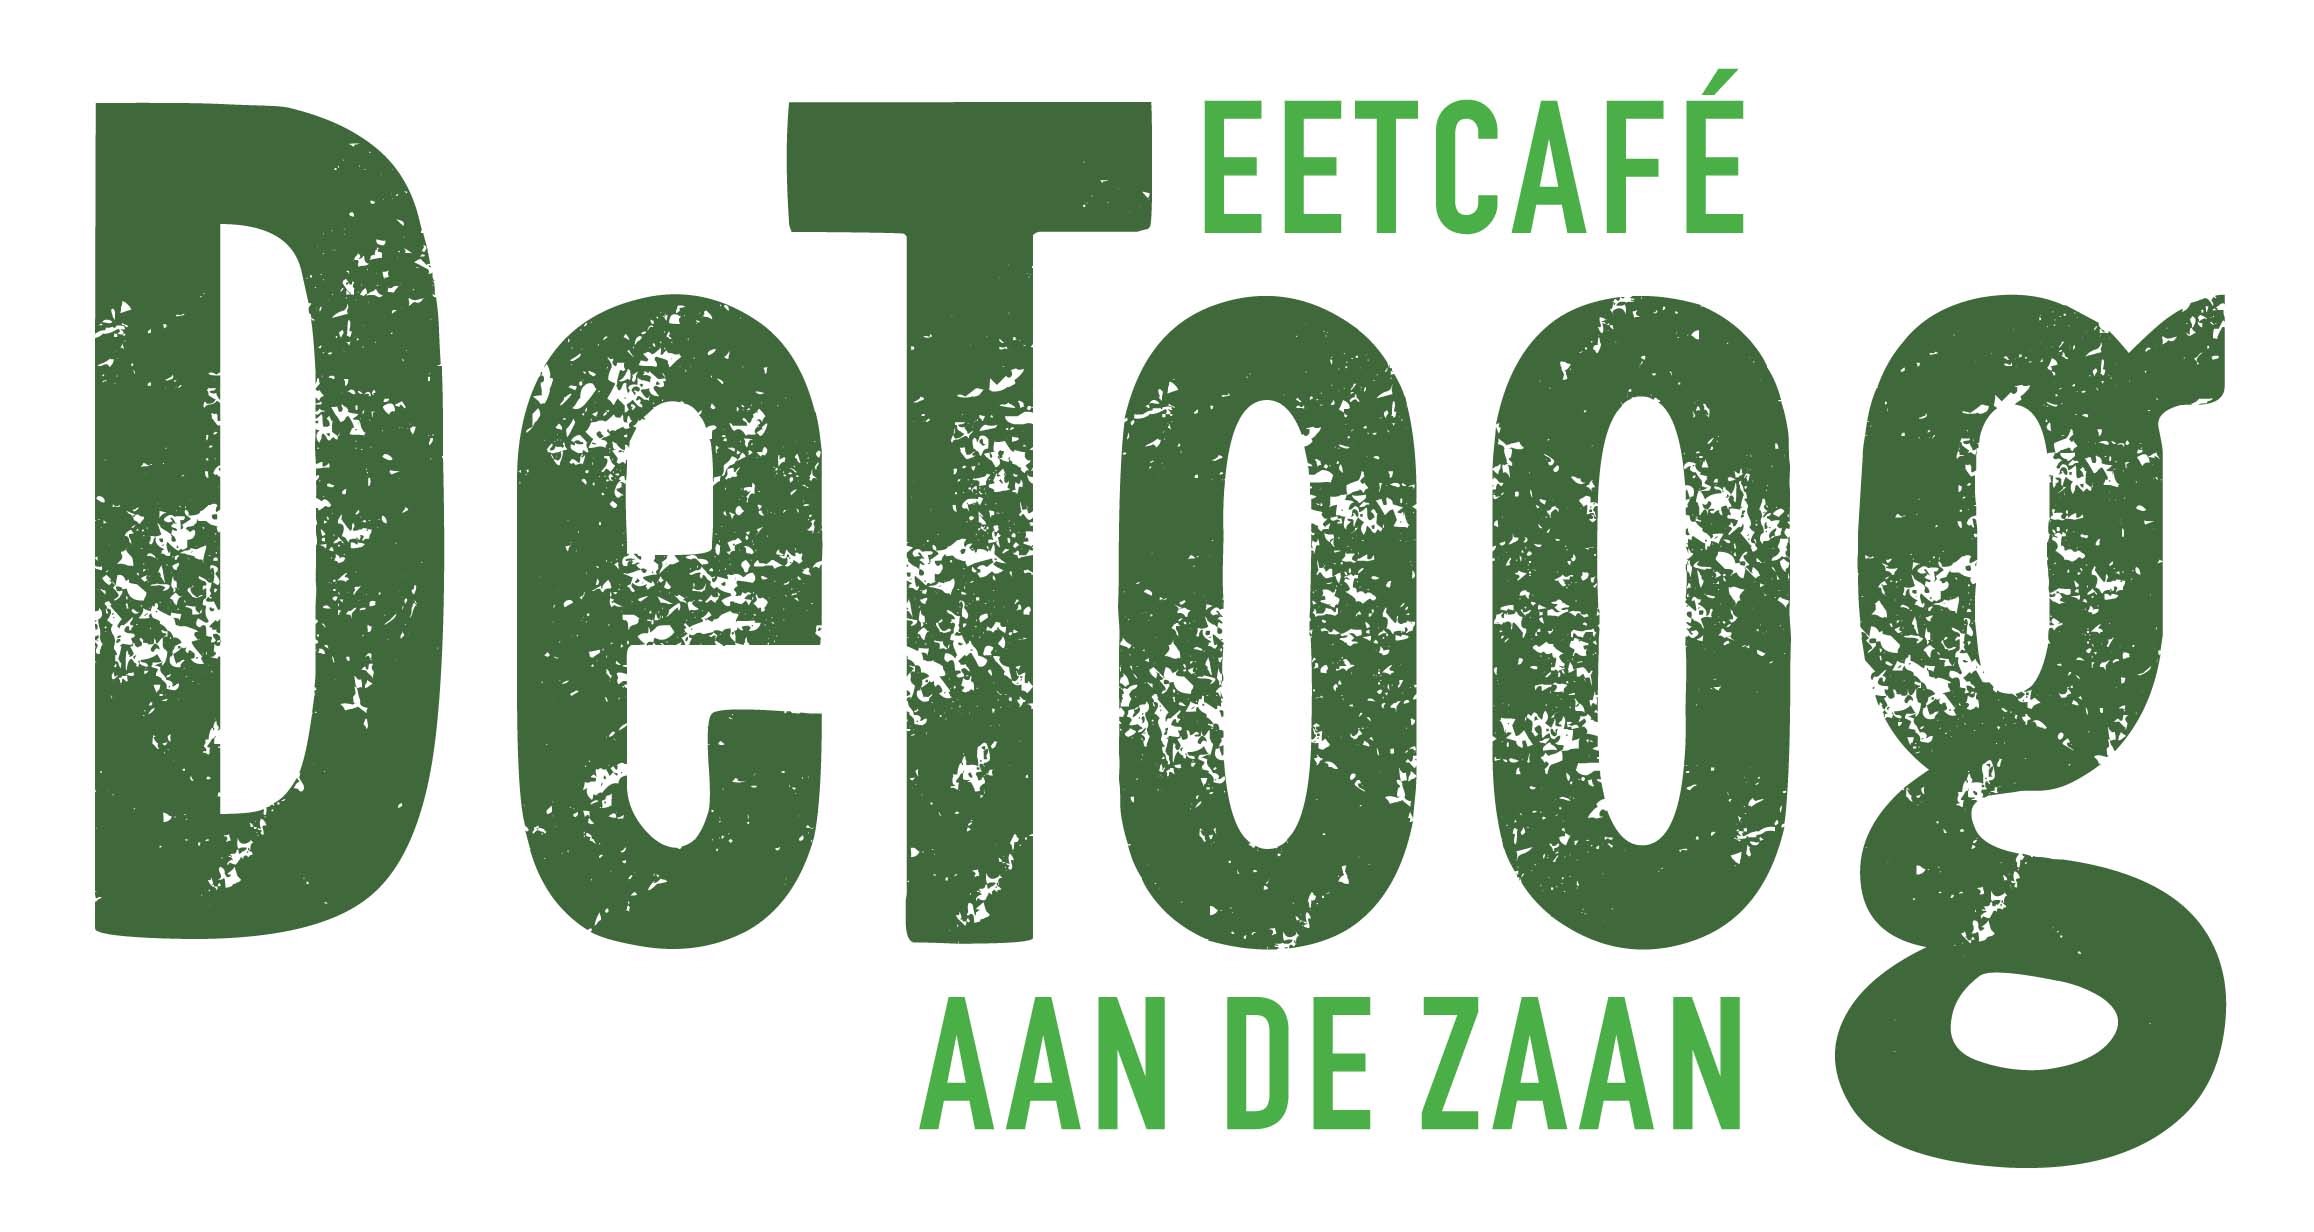 Eetcafe De Toog